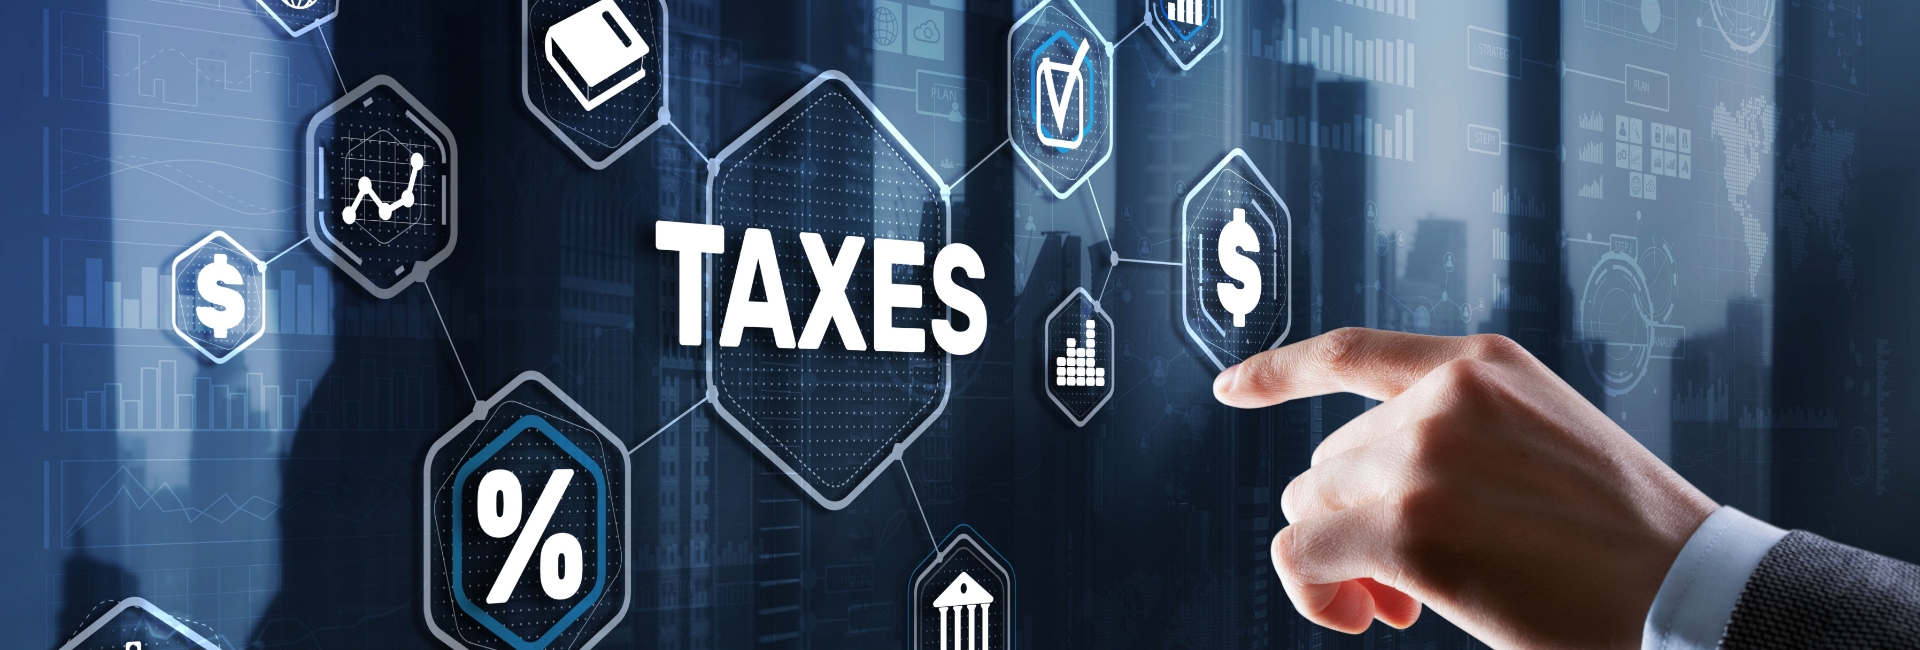 tax-filing services-banner-bg